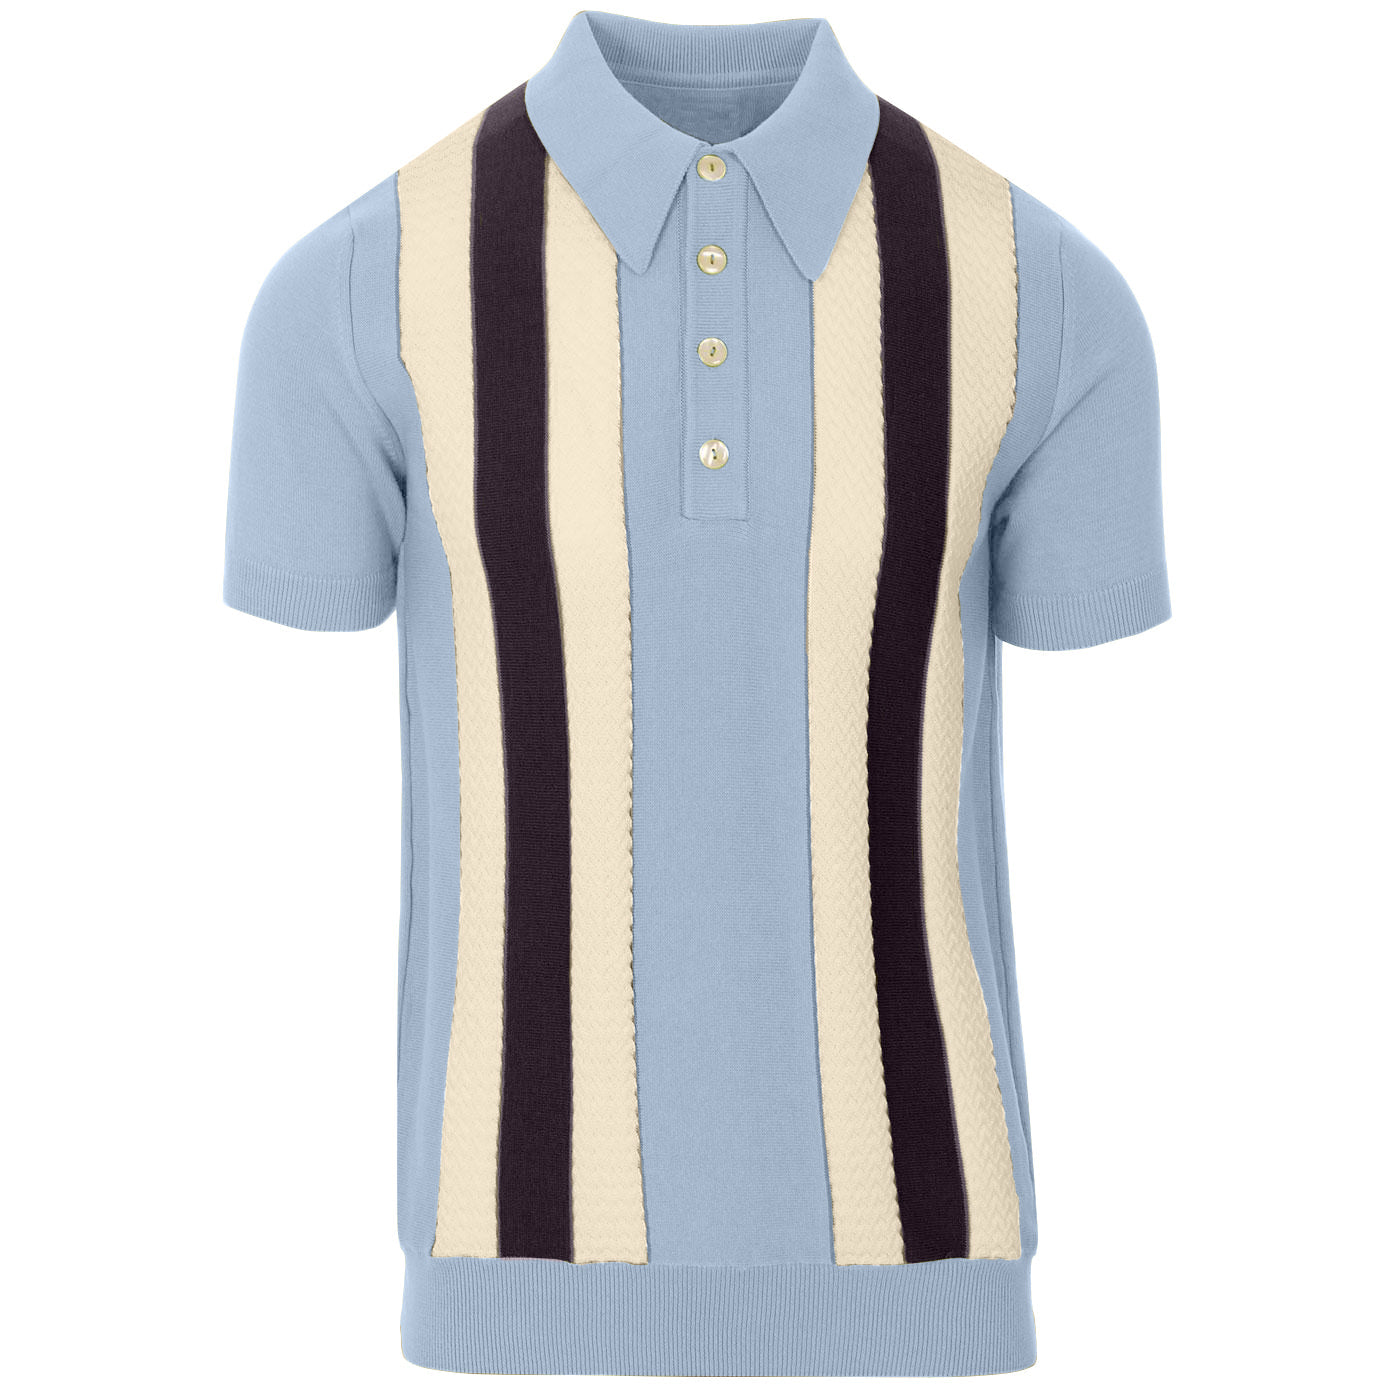 OXKnit Stripe – Polo Style Knit Vintage Retro Men 1960s Clothing Casual OXKNIT Mod Blue